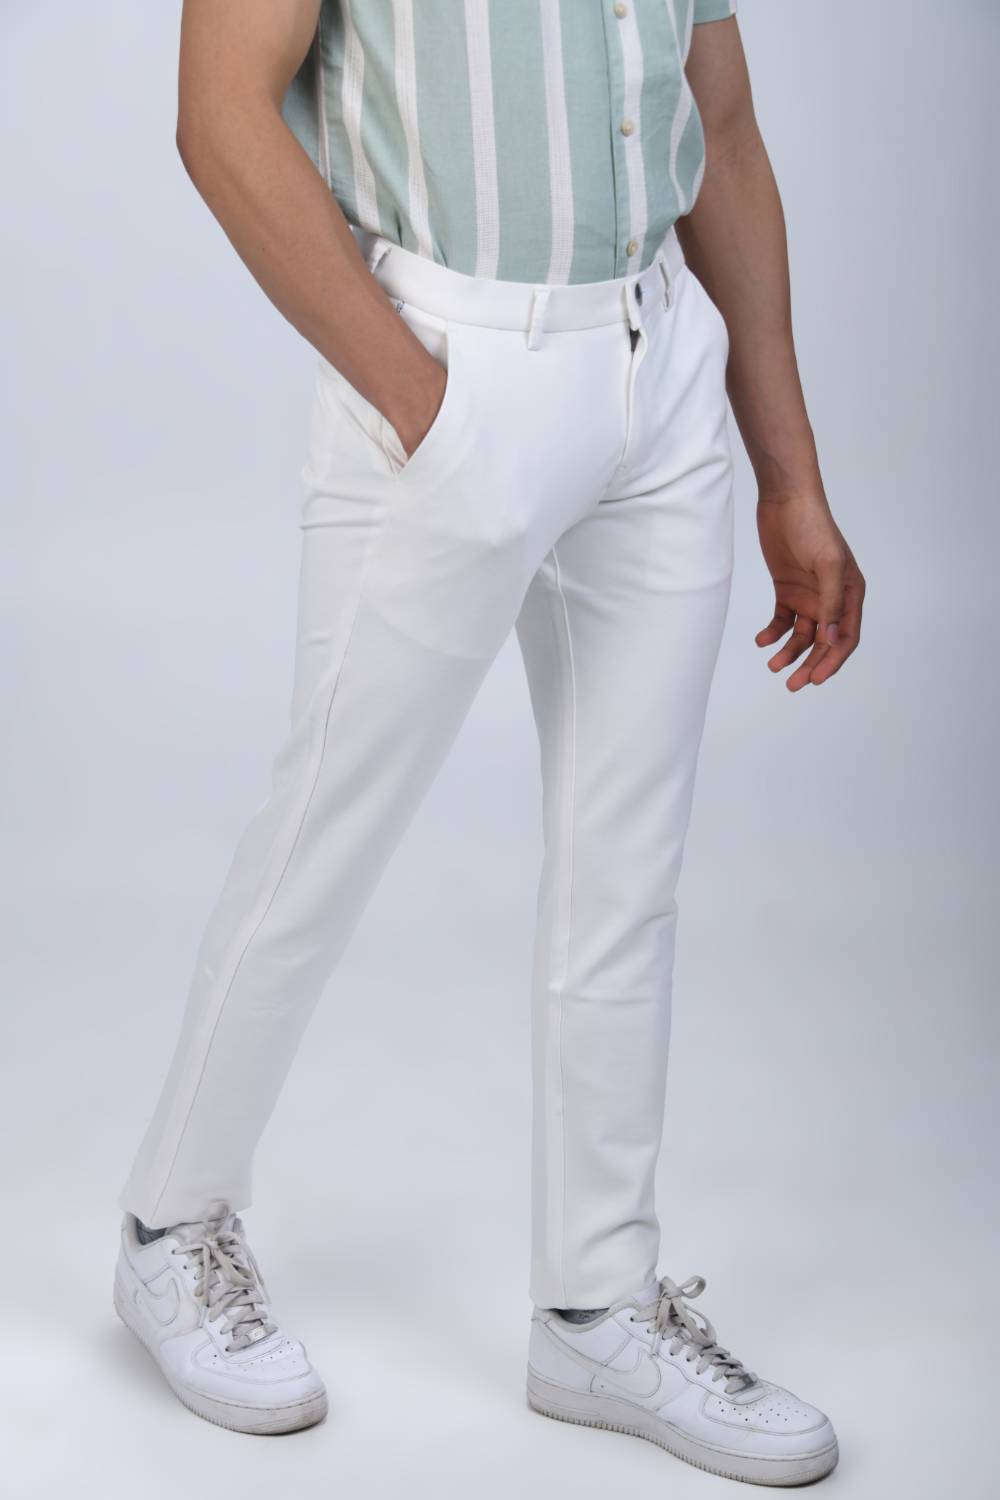 Buy Men's White Trousers Online at Bewakoof